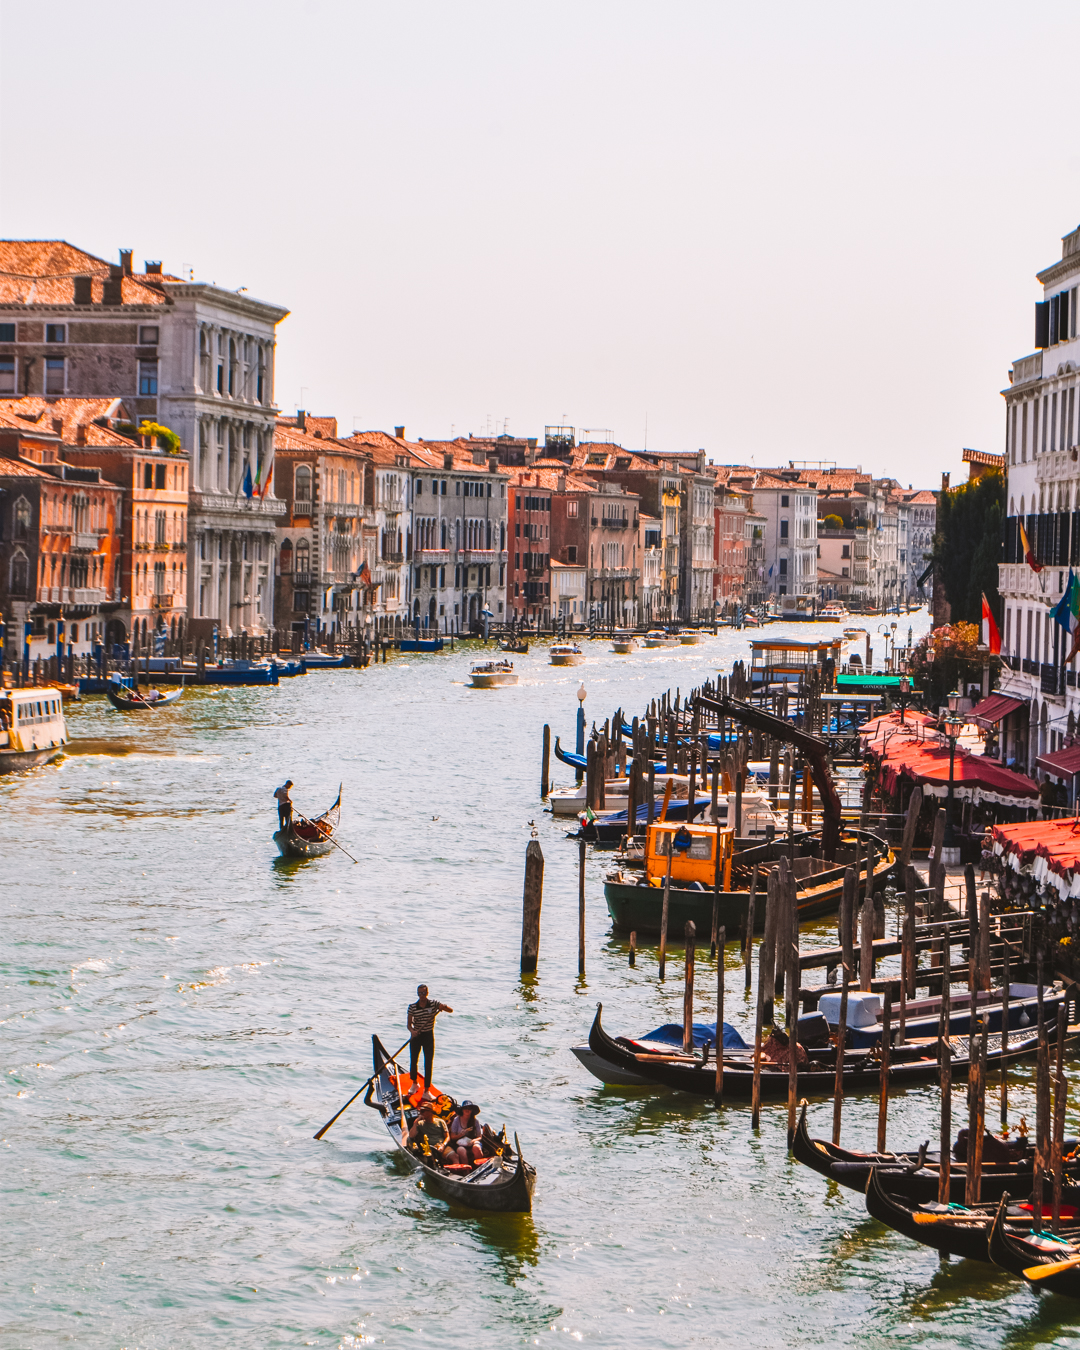 Visit Rialto Bridge during your 3 days in Venice